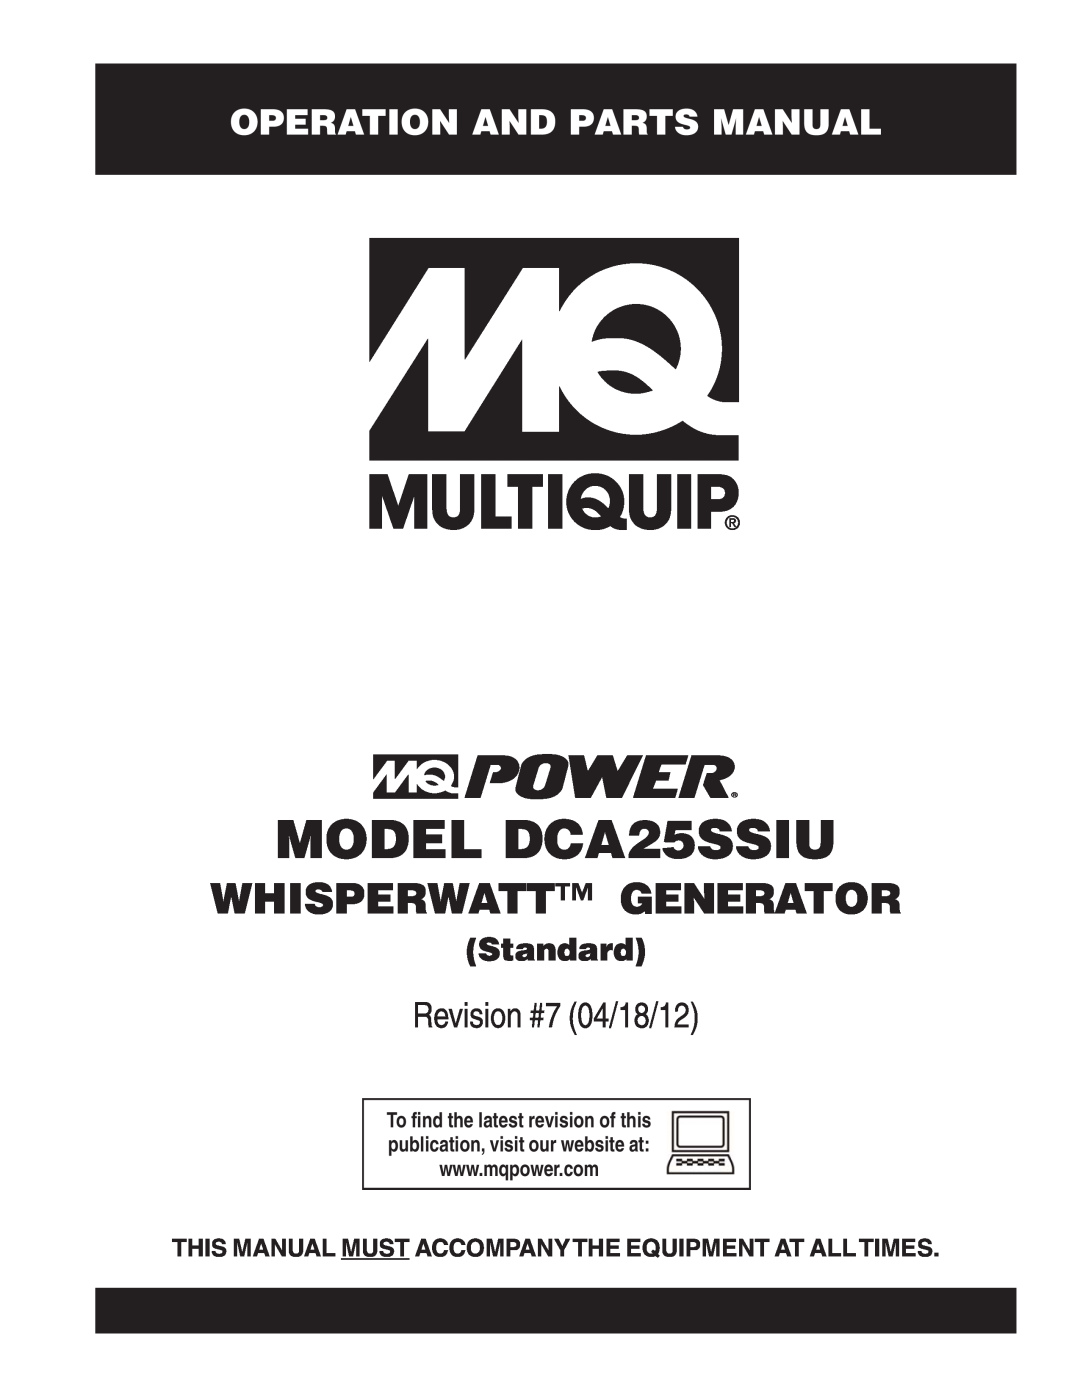 Multiquip manual Operation And Parts Manual, Standard, MODEL DCA25SSIU, Whisperwatt Generator, Revision #7 04/18/12 